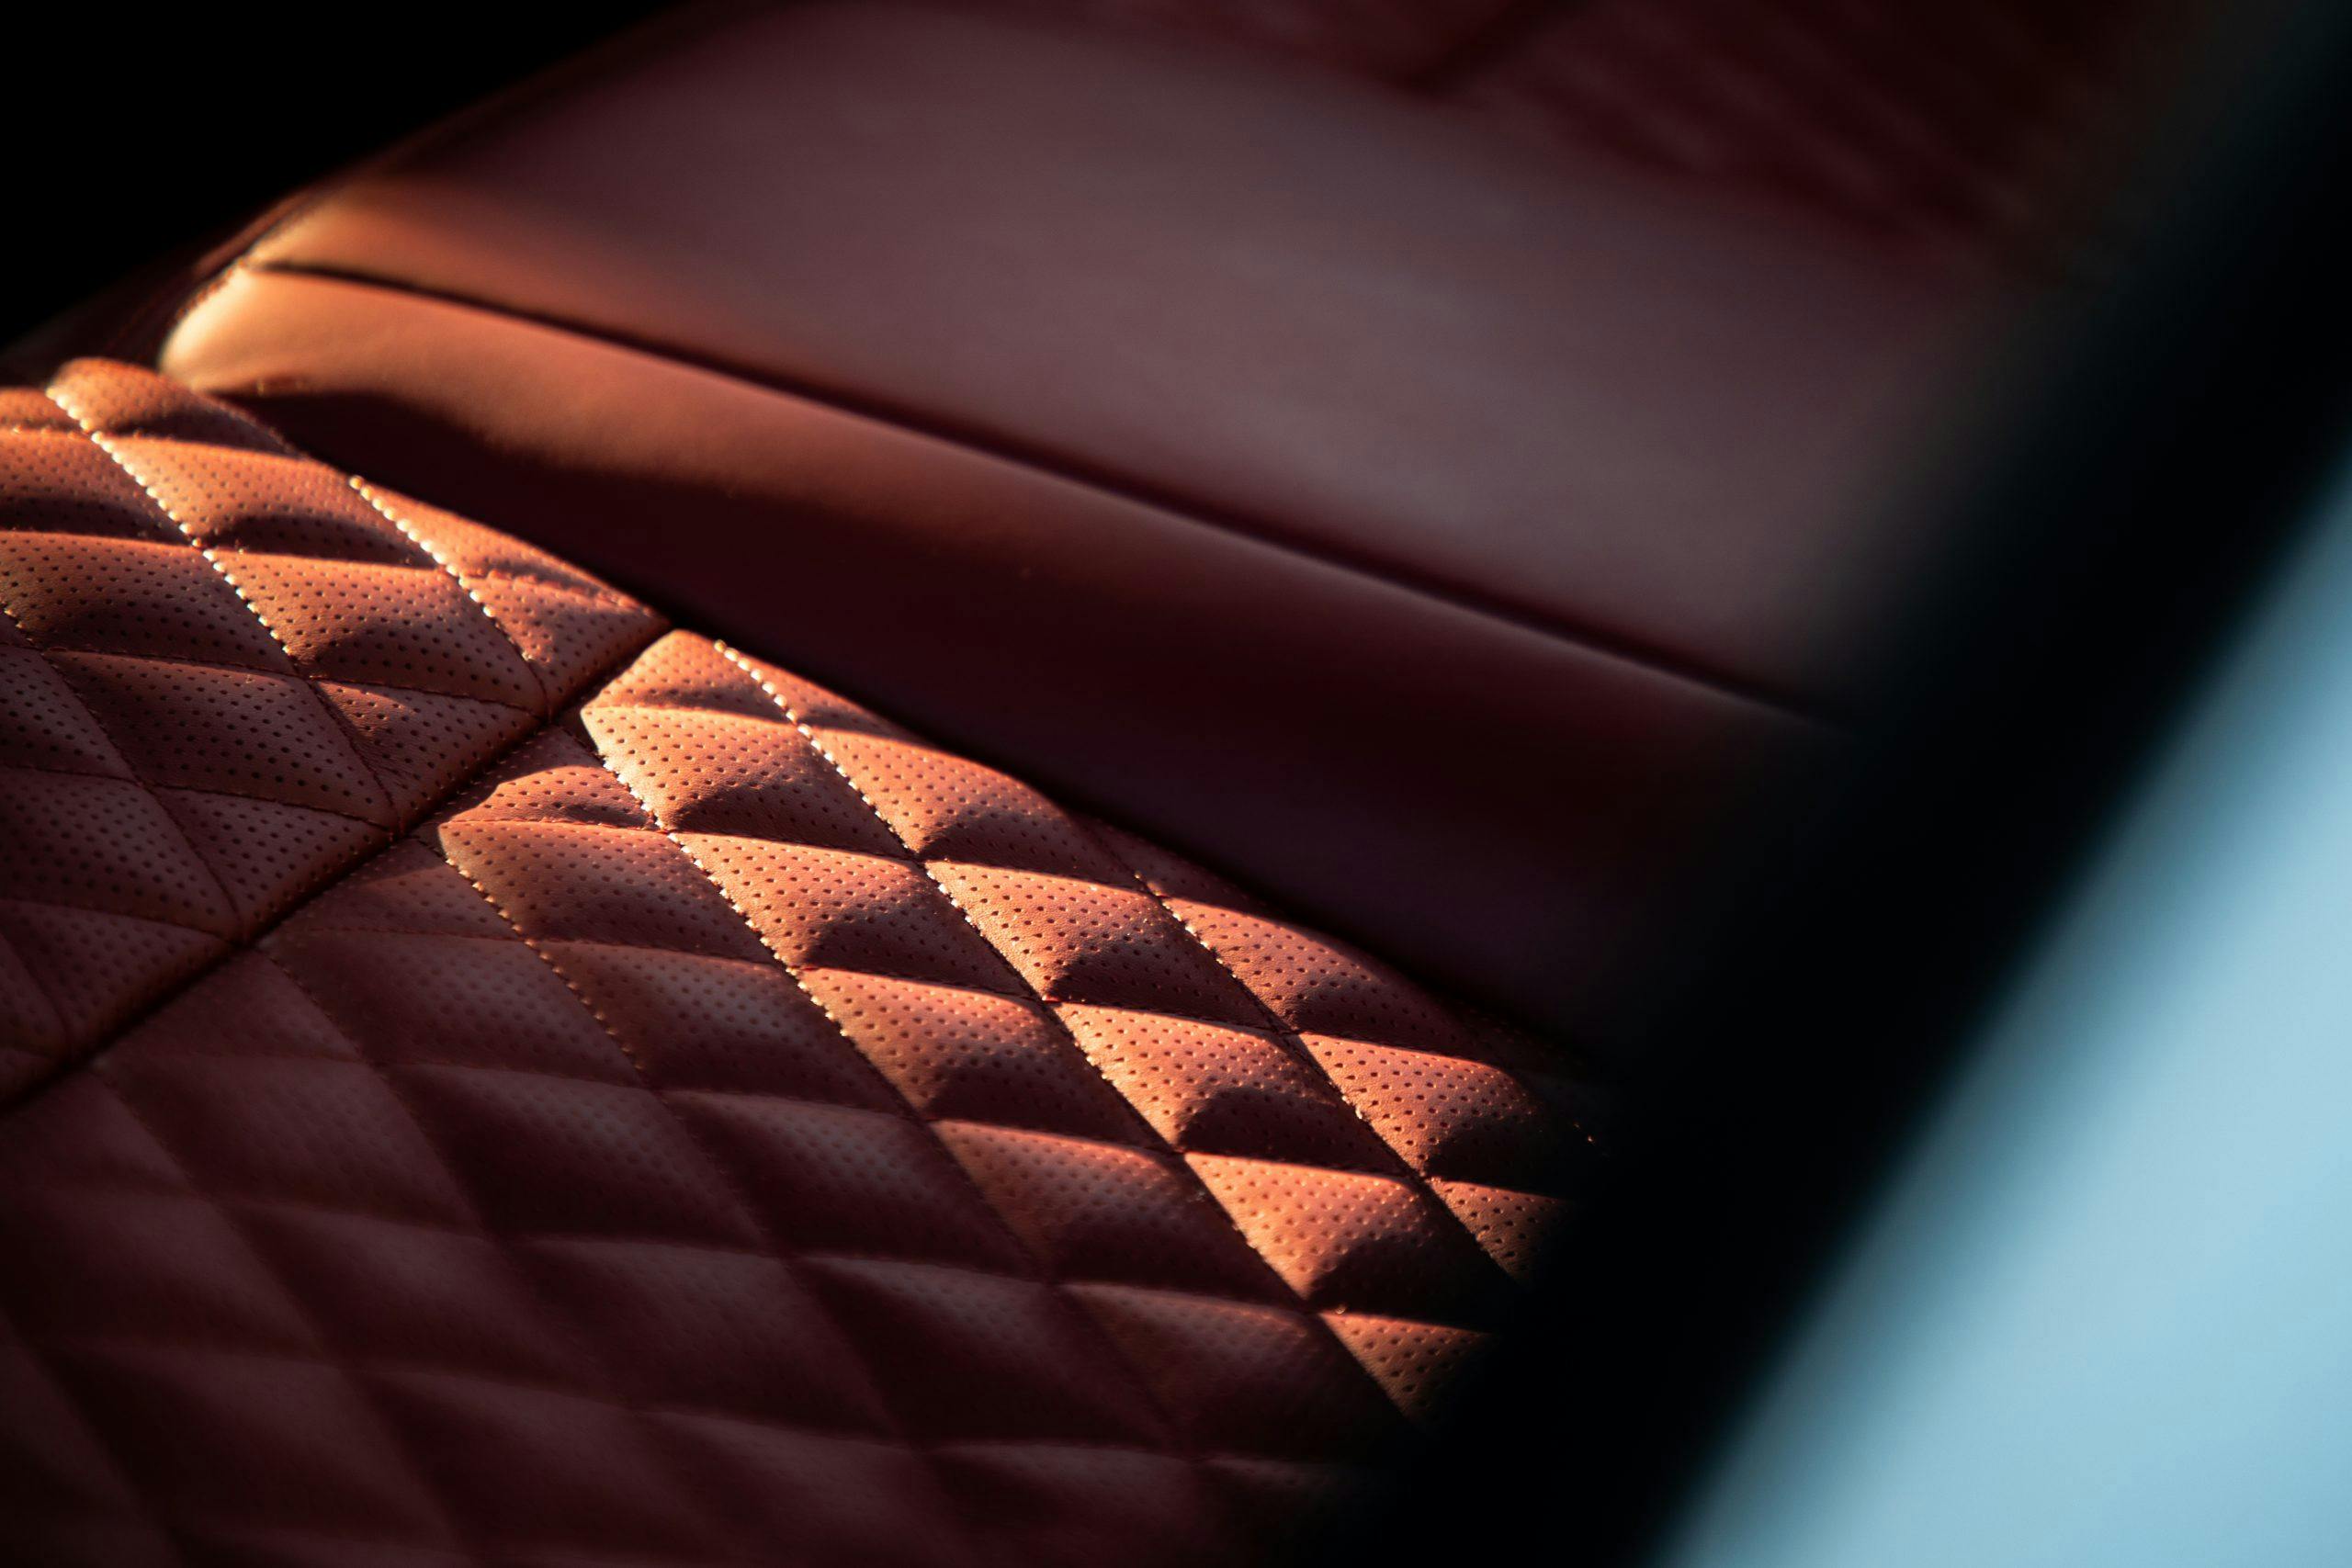 2022 Genesis G70 interior seat diamond stitch detail